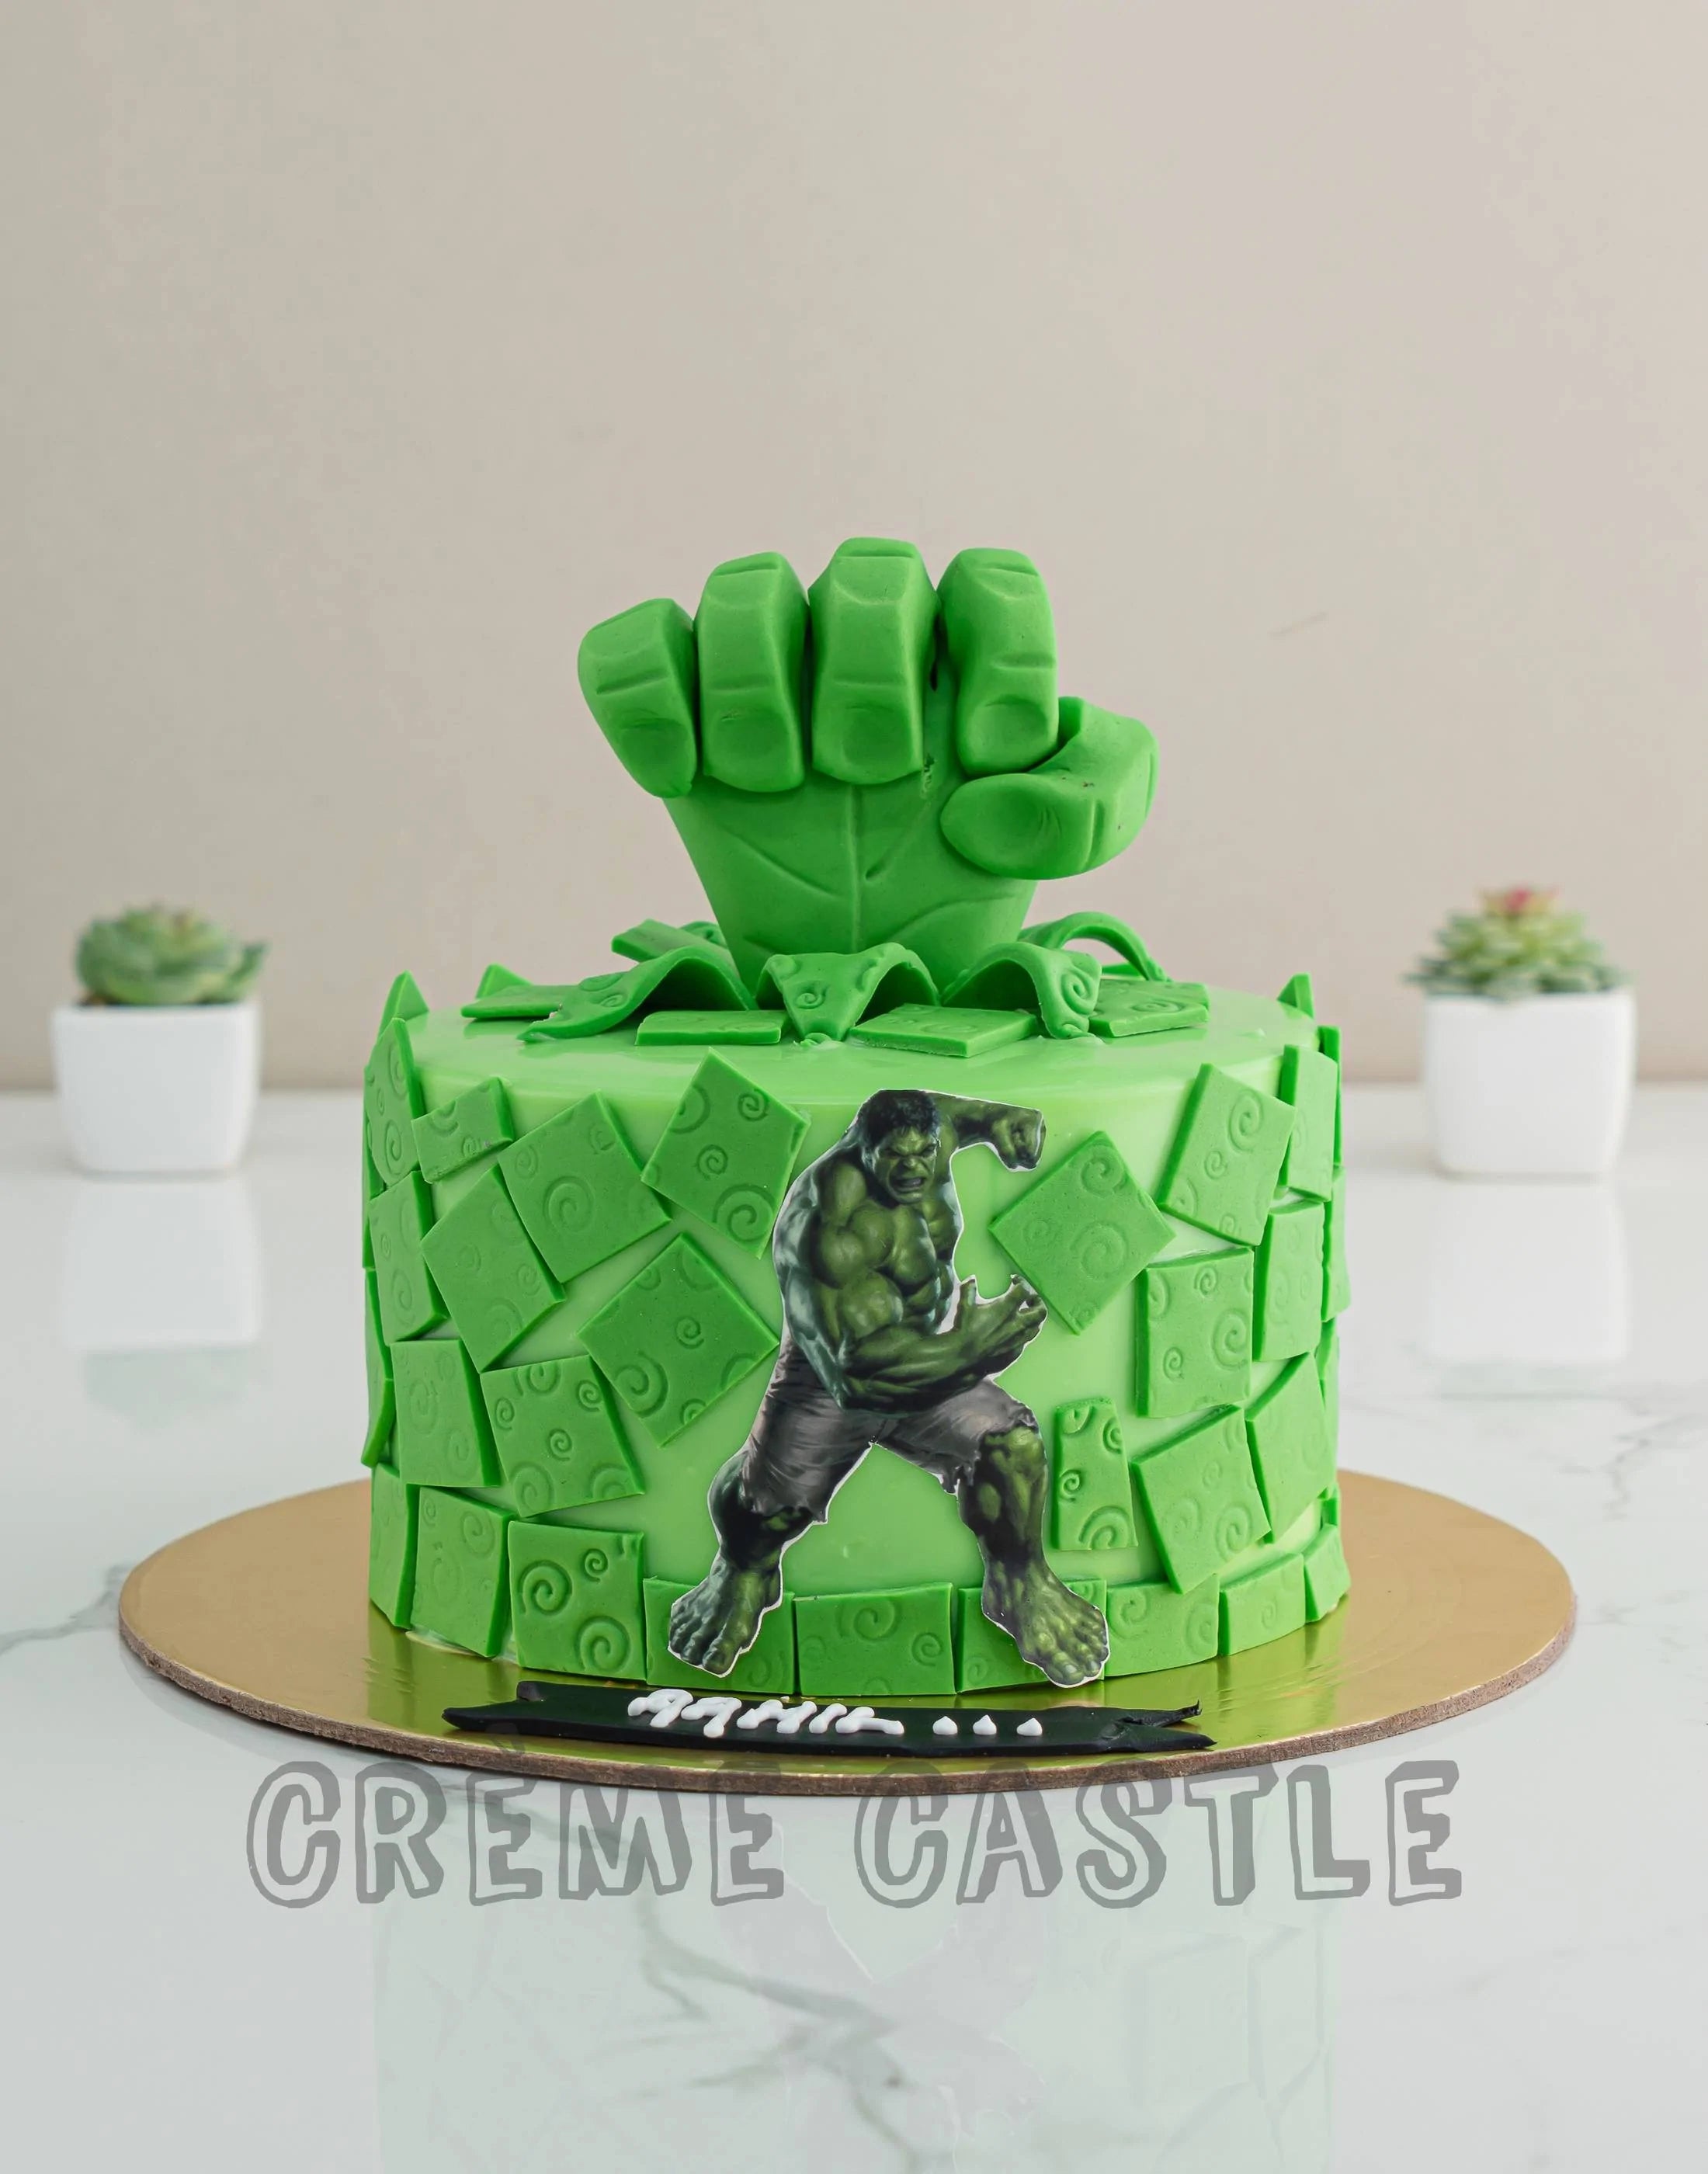 Incredible Hulk Cake - Edible Perfections